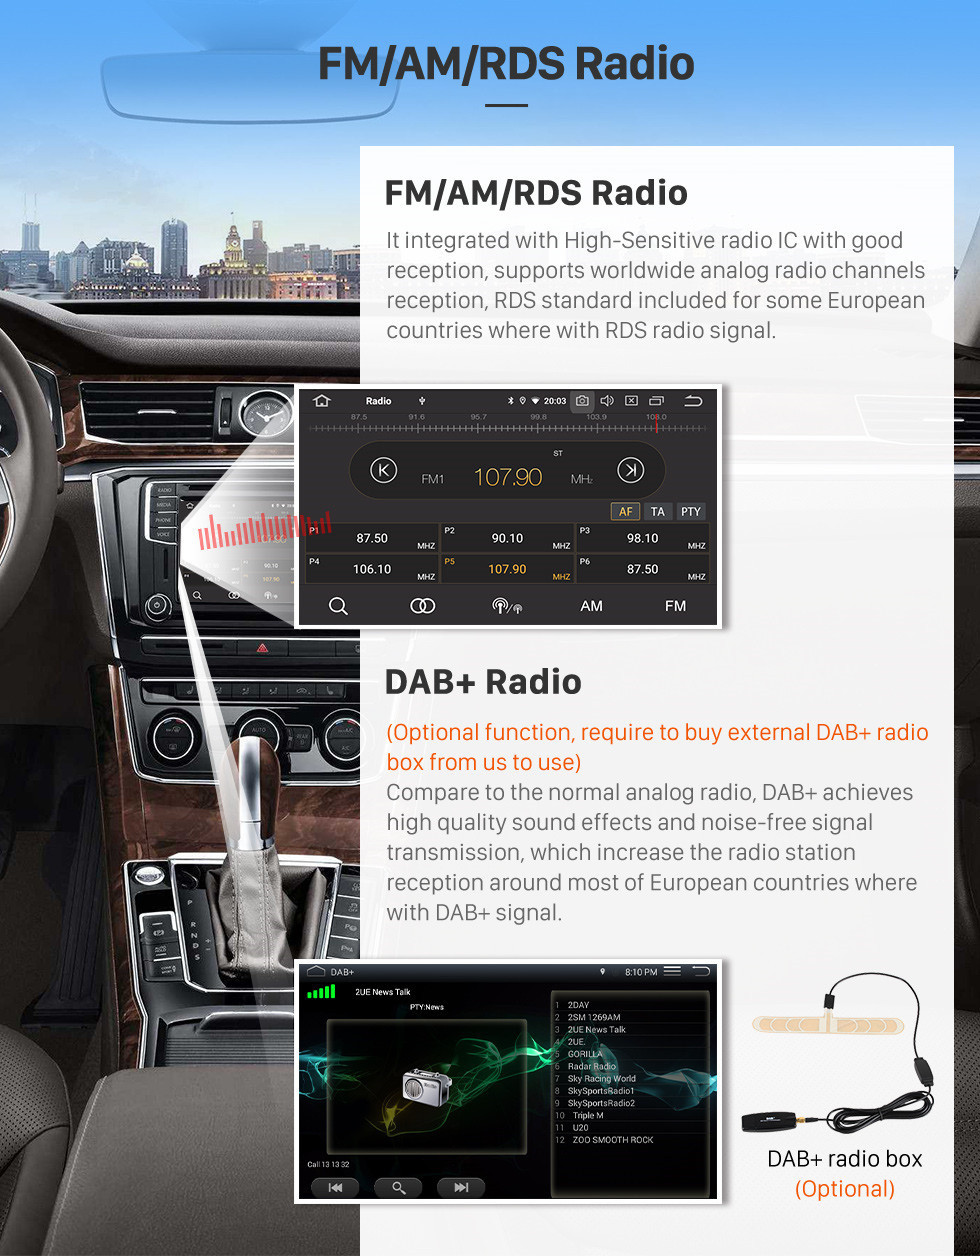 Seicane Chevy Chevrolet CRUZE 2013-2015 9,0 9 Zoll GPS-Navigation Bluetooth-Radio mit USB FM-Musik Carplay-Unterstützung Lenkradsteuerung 4G-Ersatzkamera